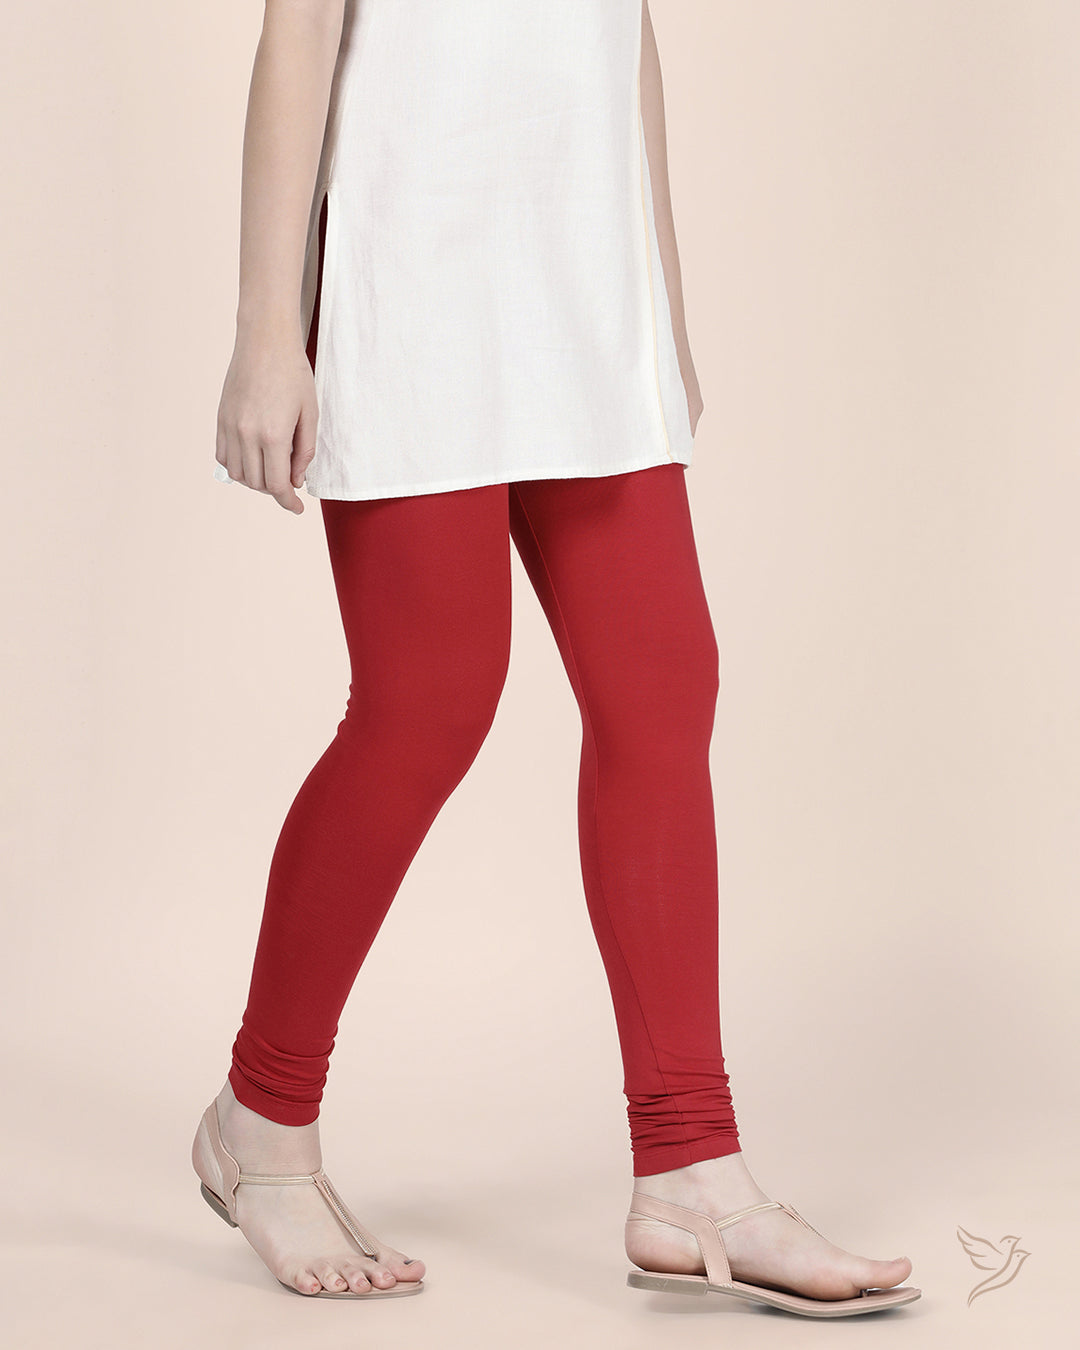 Lava Red Cotton Churidar Legging for College girls